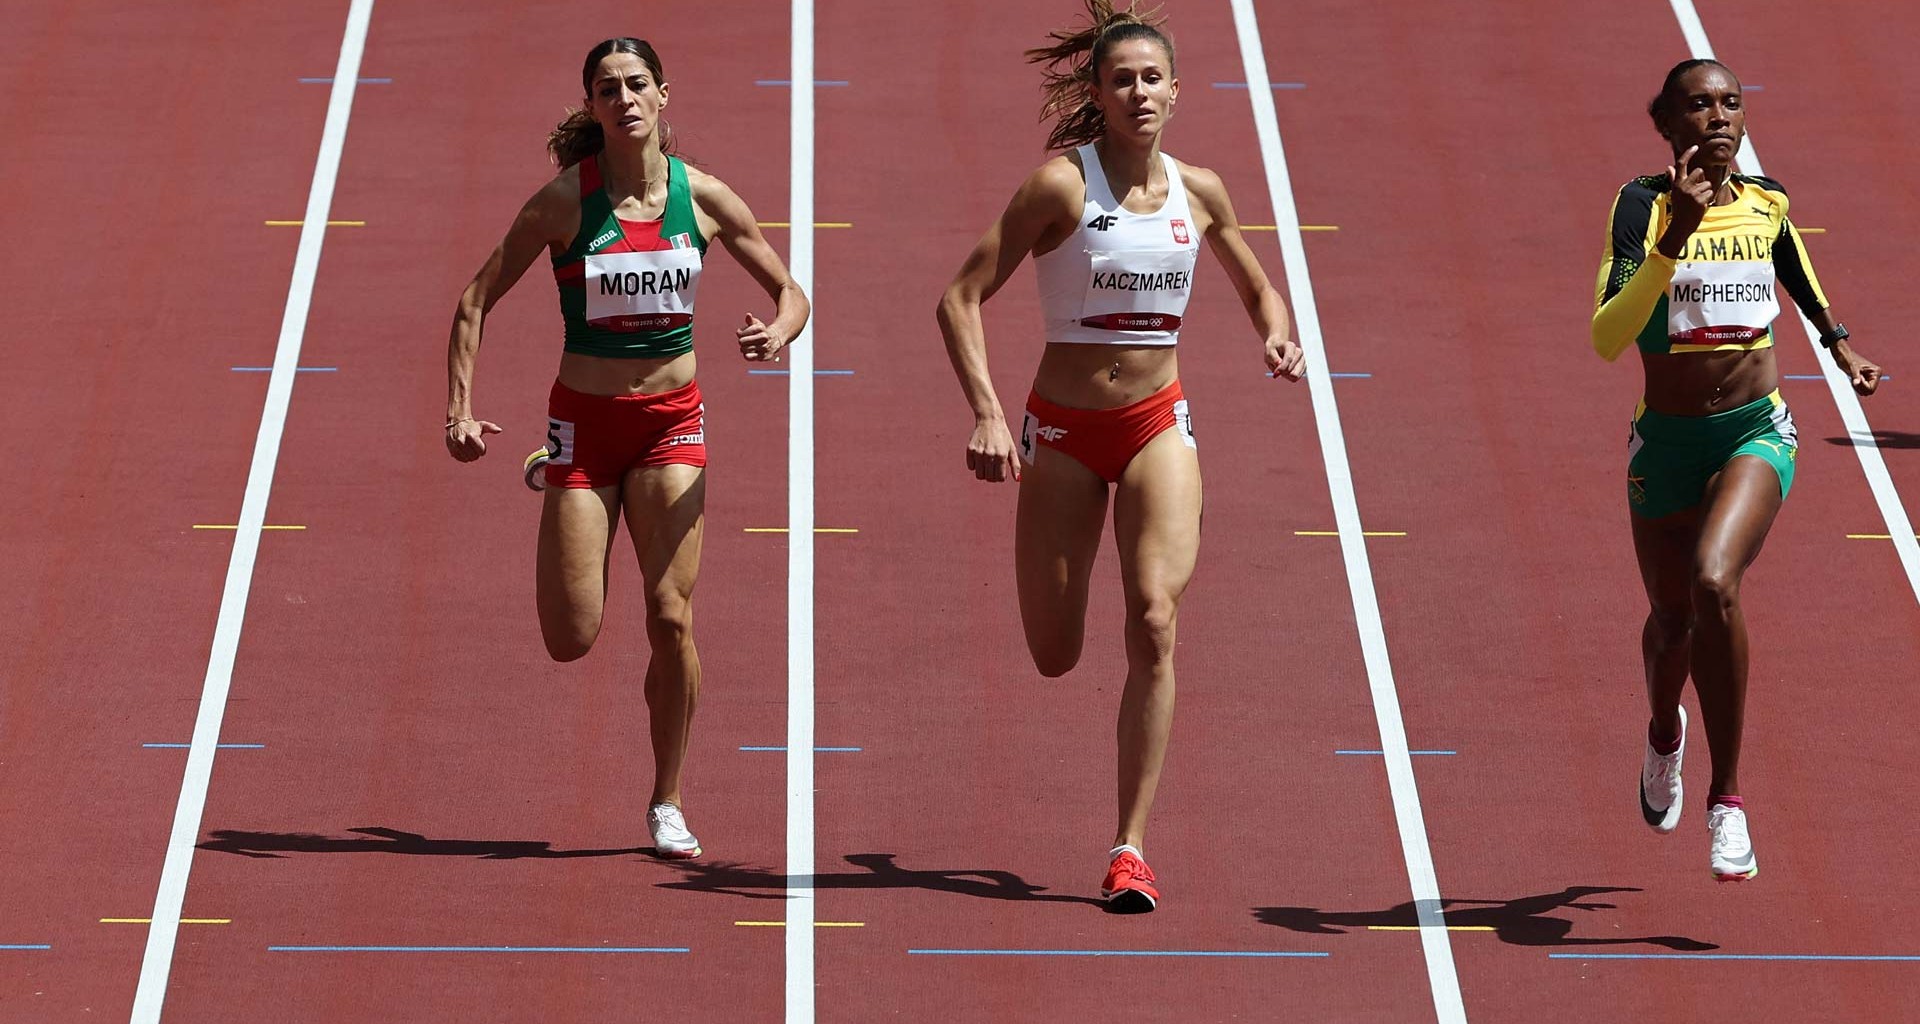 Paola Morán atleta destacada de Borregos Tec logró su pase a semifinales de 400 metros planos en Tokio 2020.